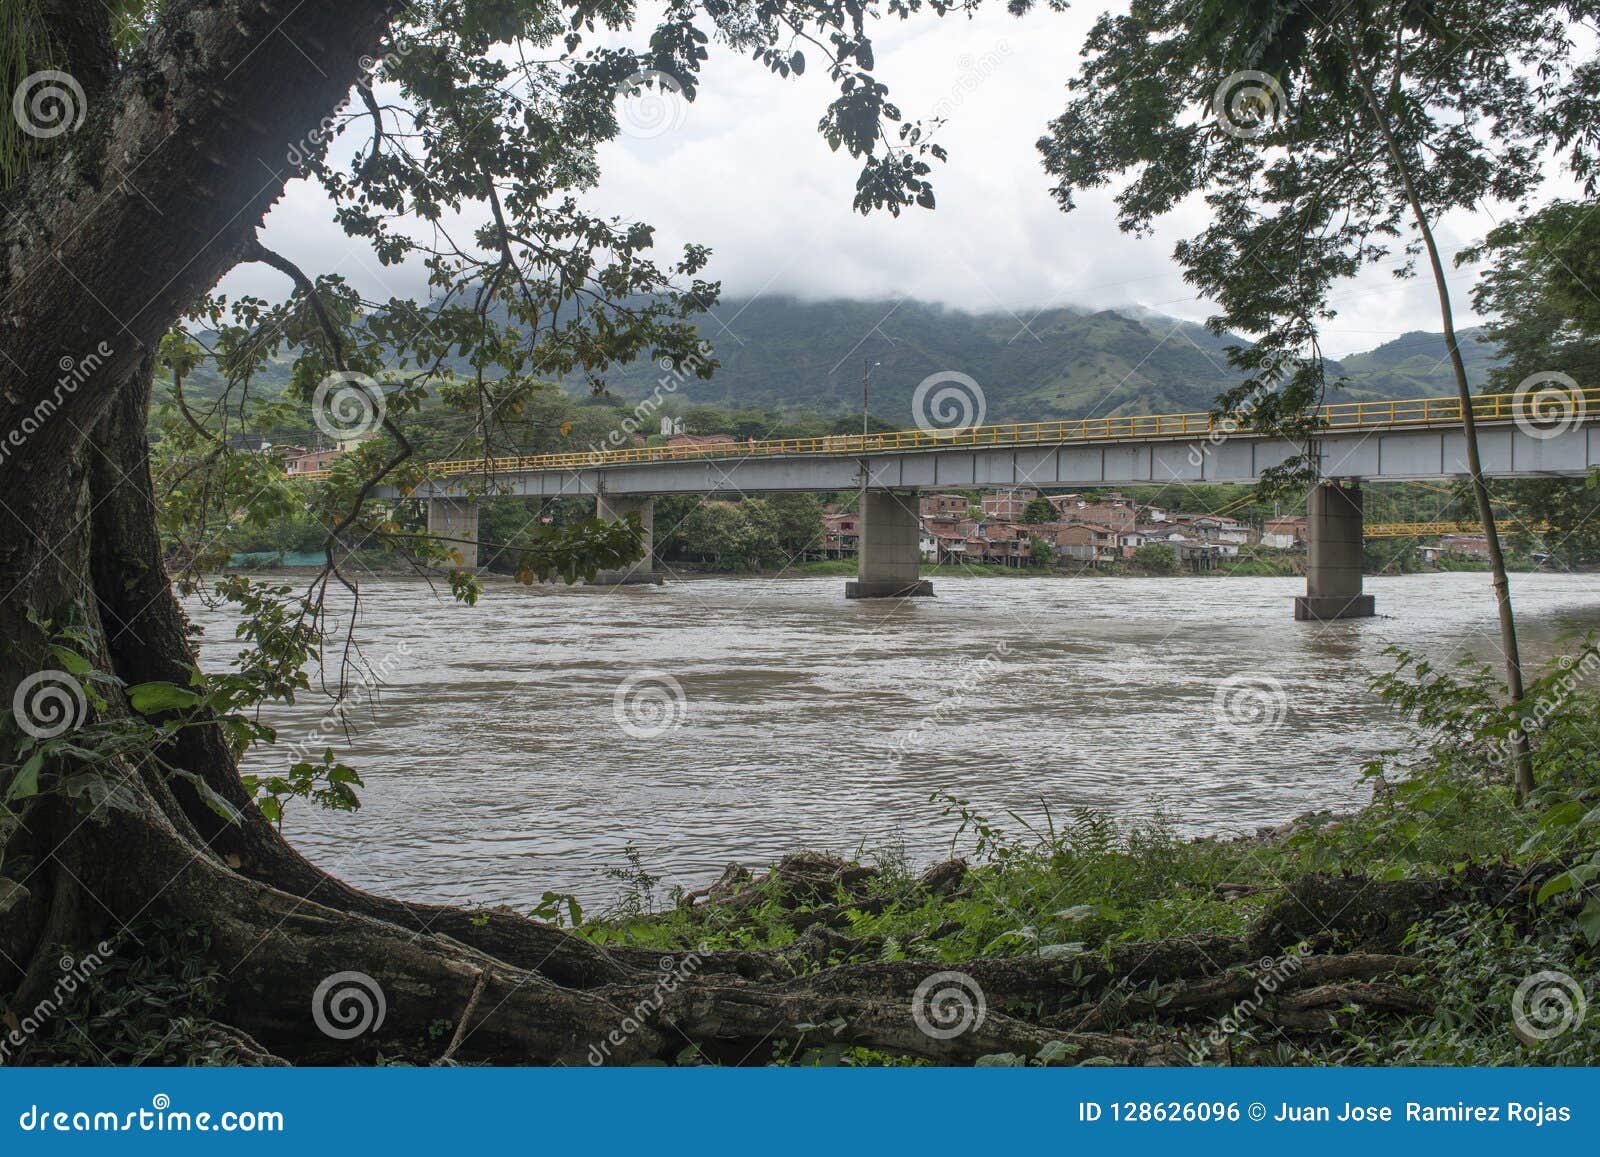 bridge of the pintada antioquia